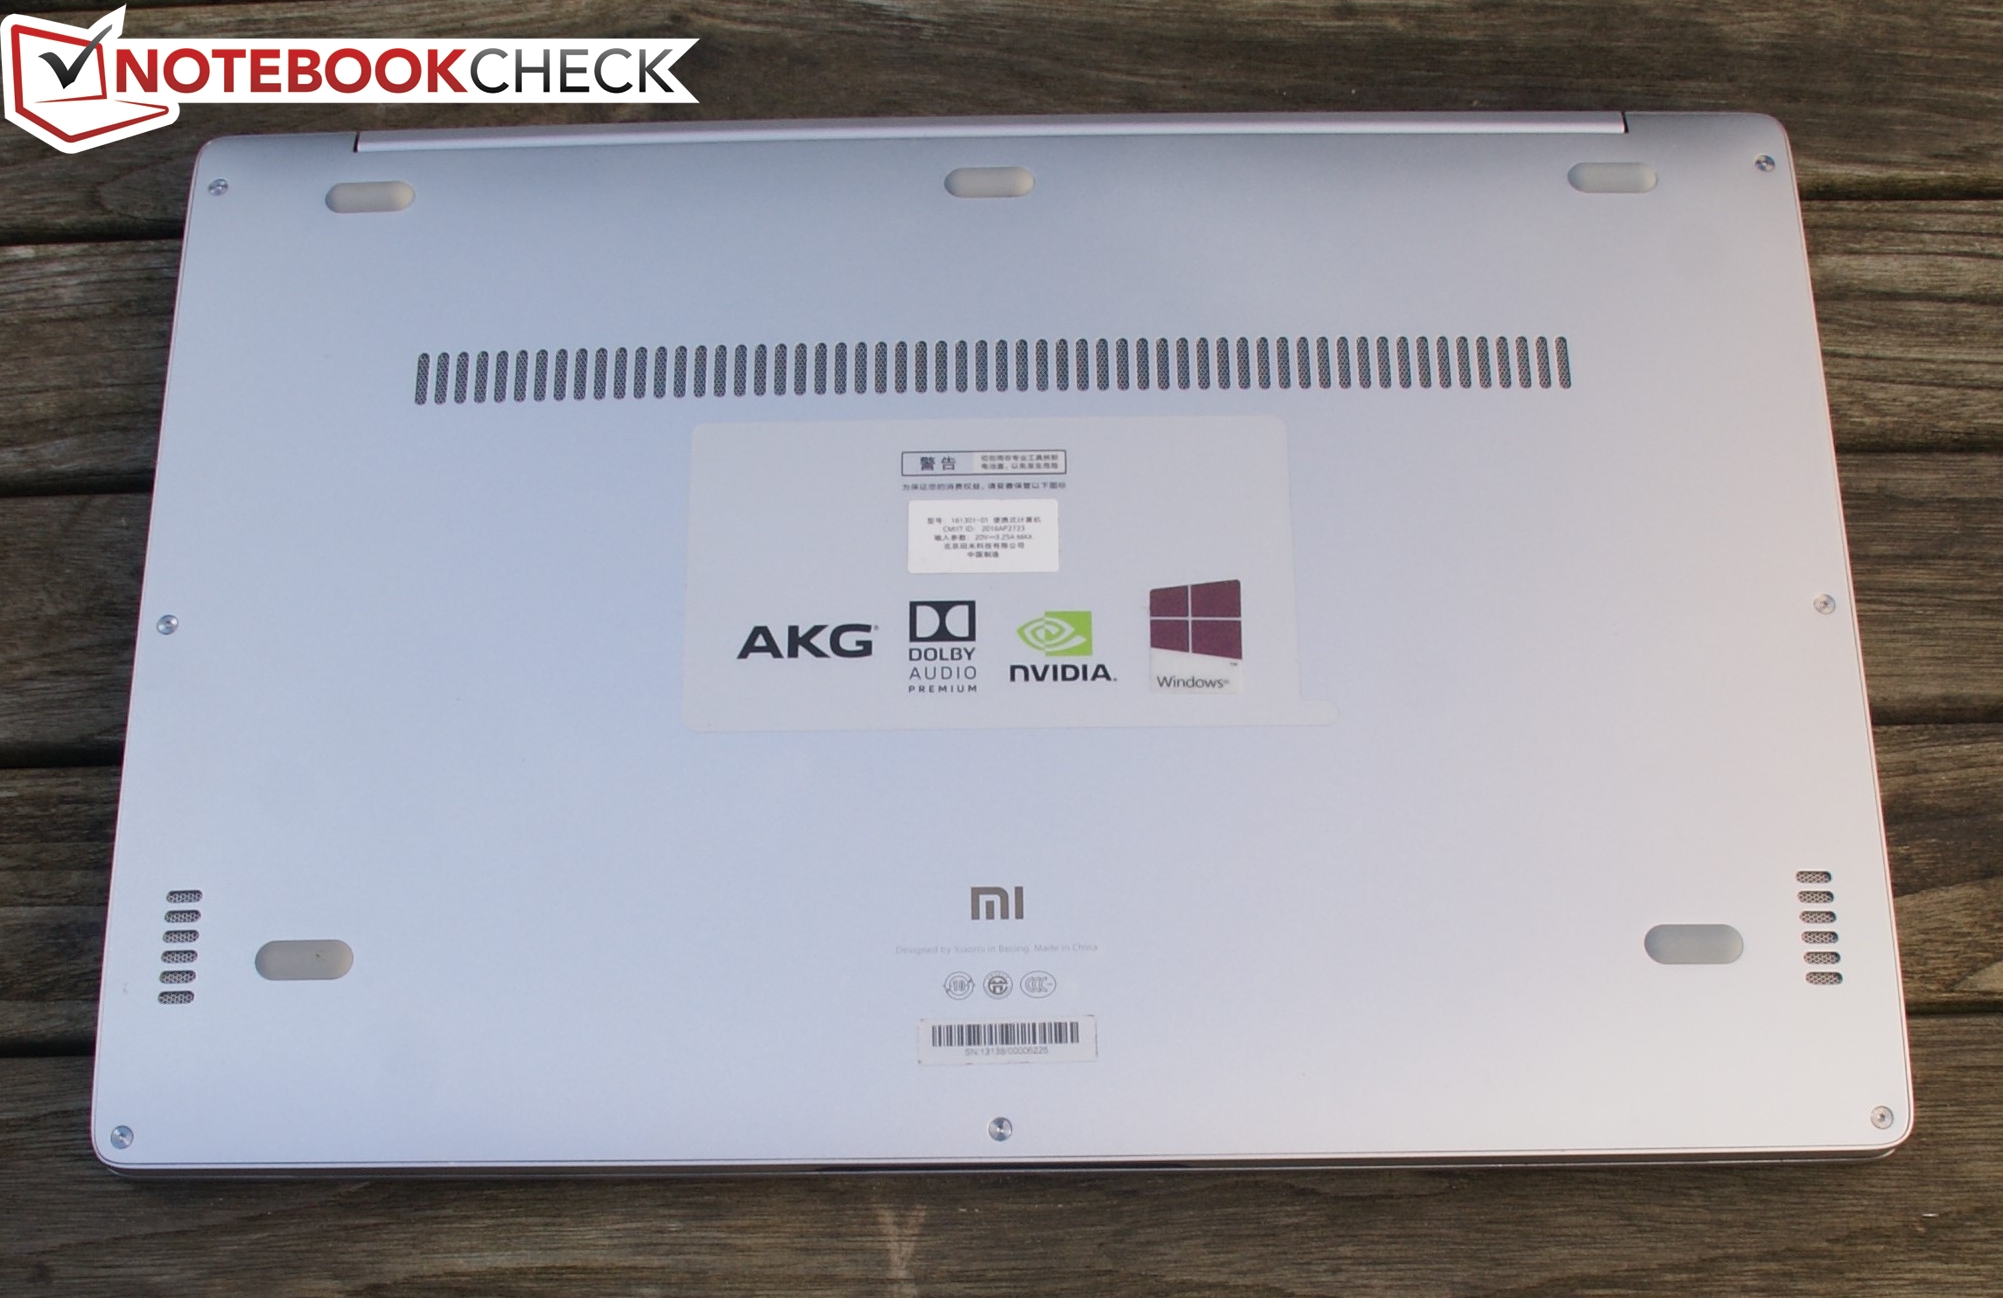 Xiaomi Mi Air (13.3-inch) Notebook Review - NotebookCheck.net Reviews